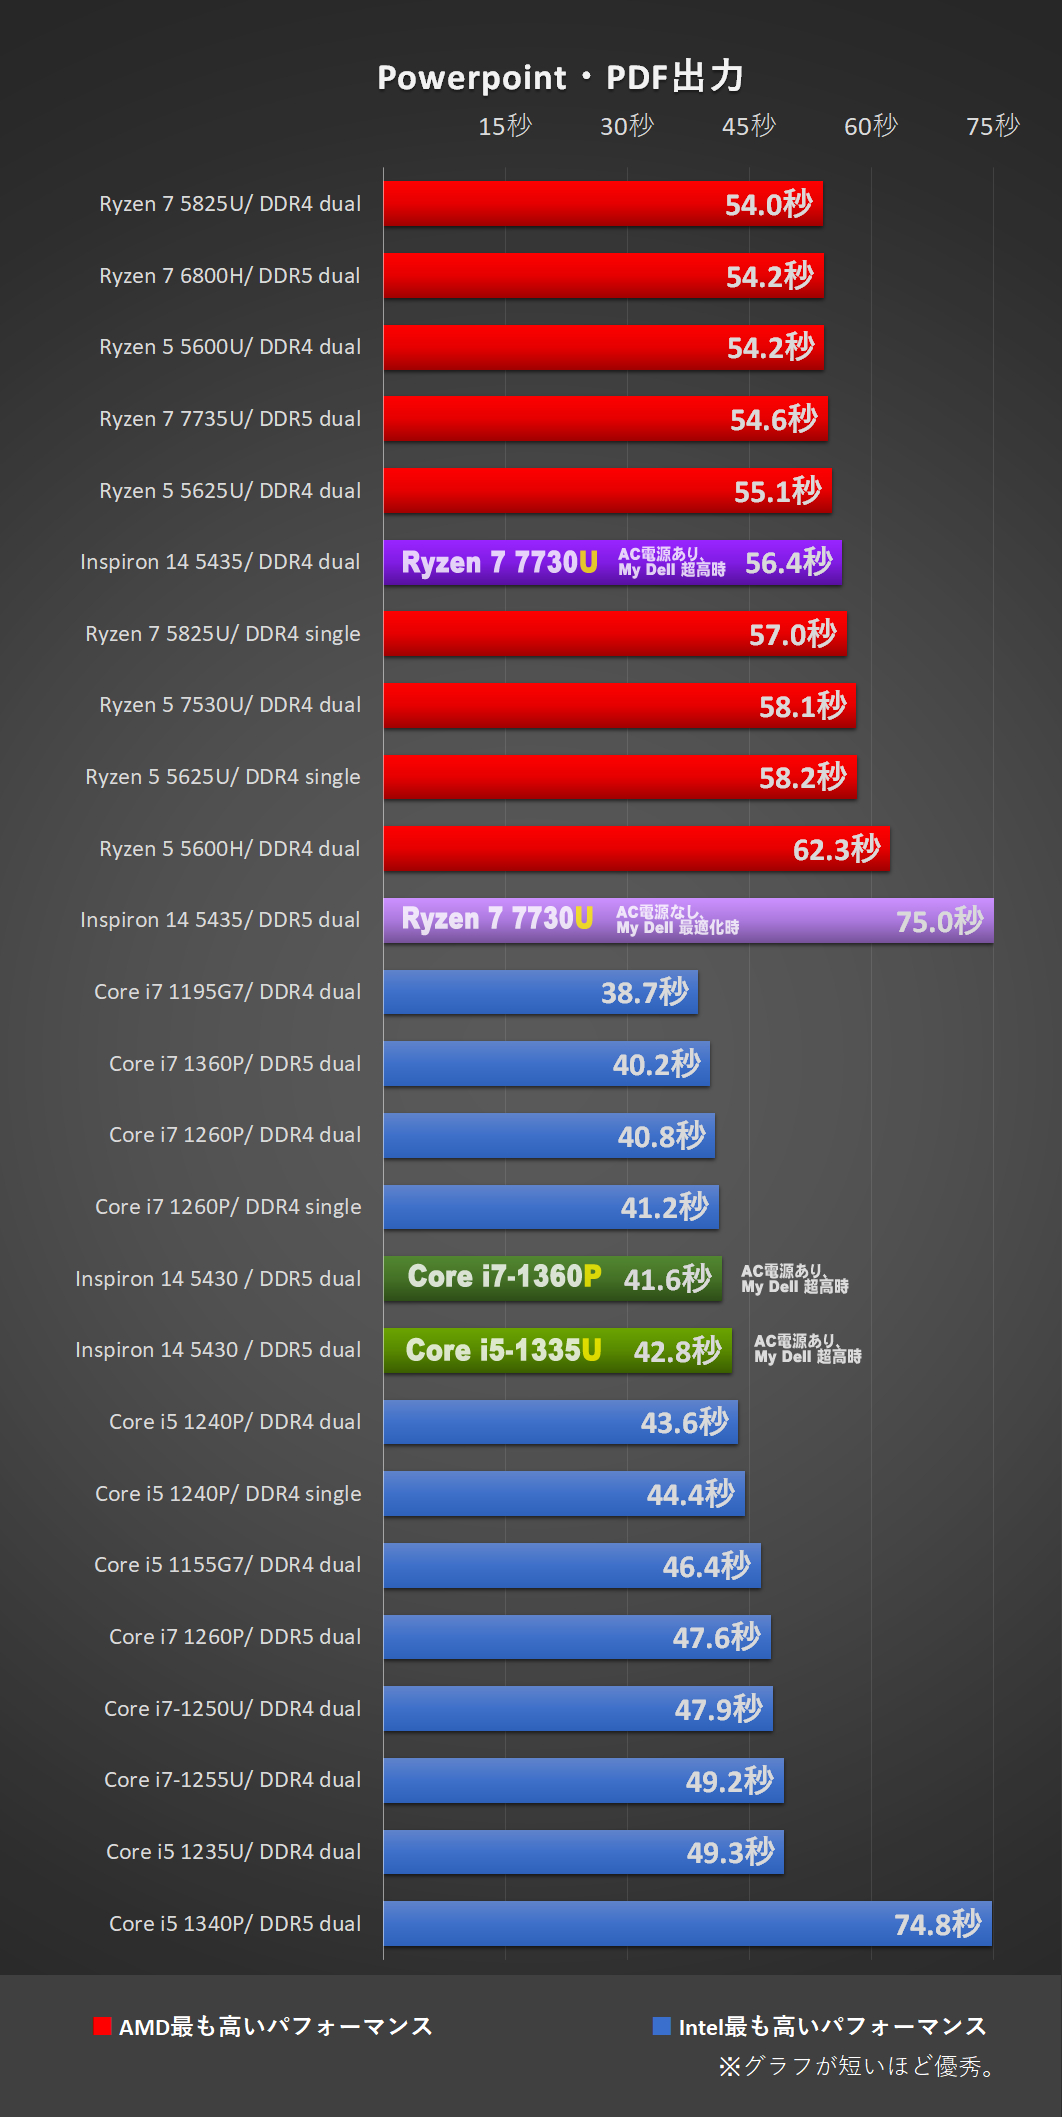 「Inspiron 14 5435（AMD）」Ryzen 7 7730Uにて、Powerpoint・PDF出力処理時間比較